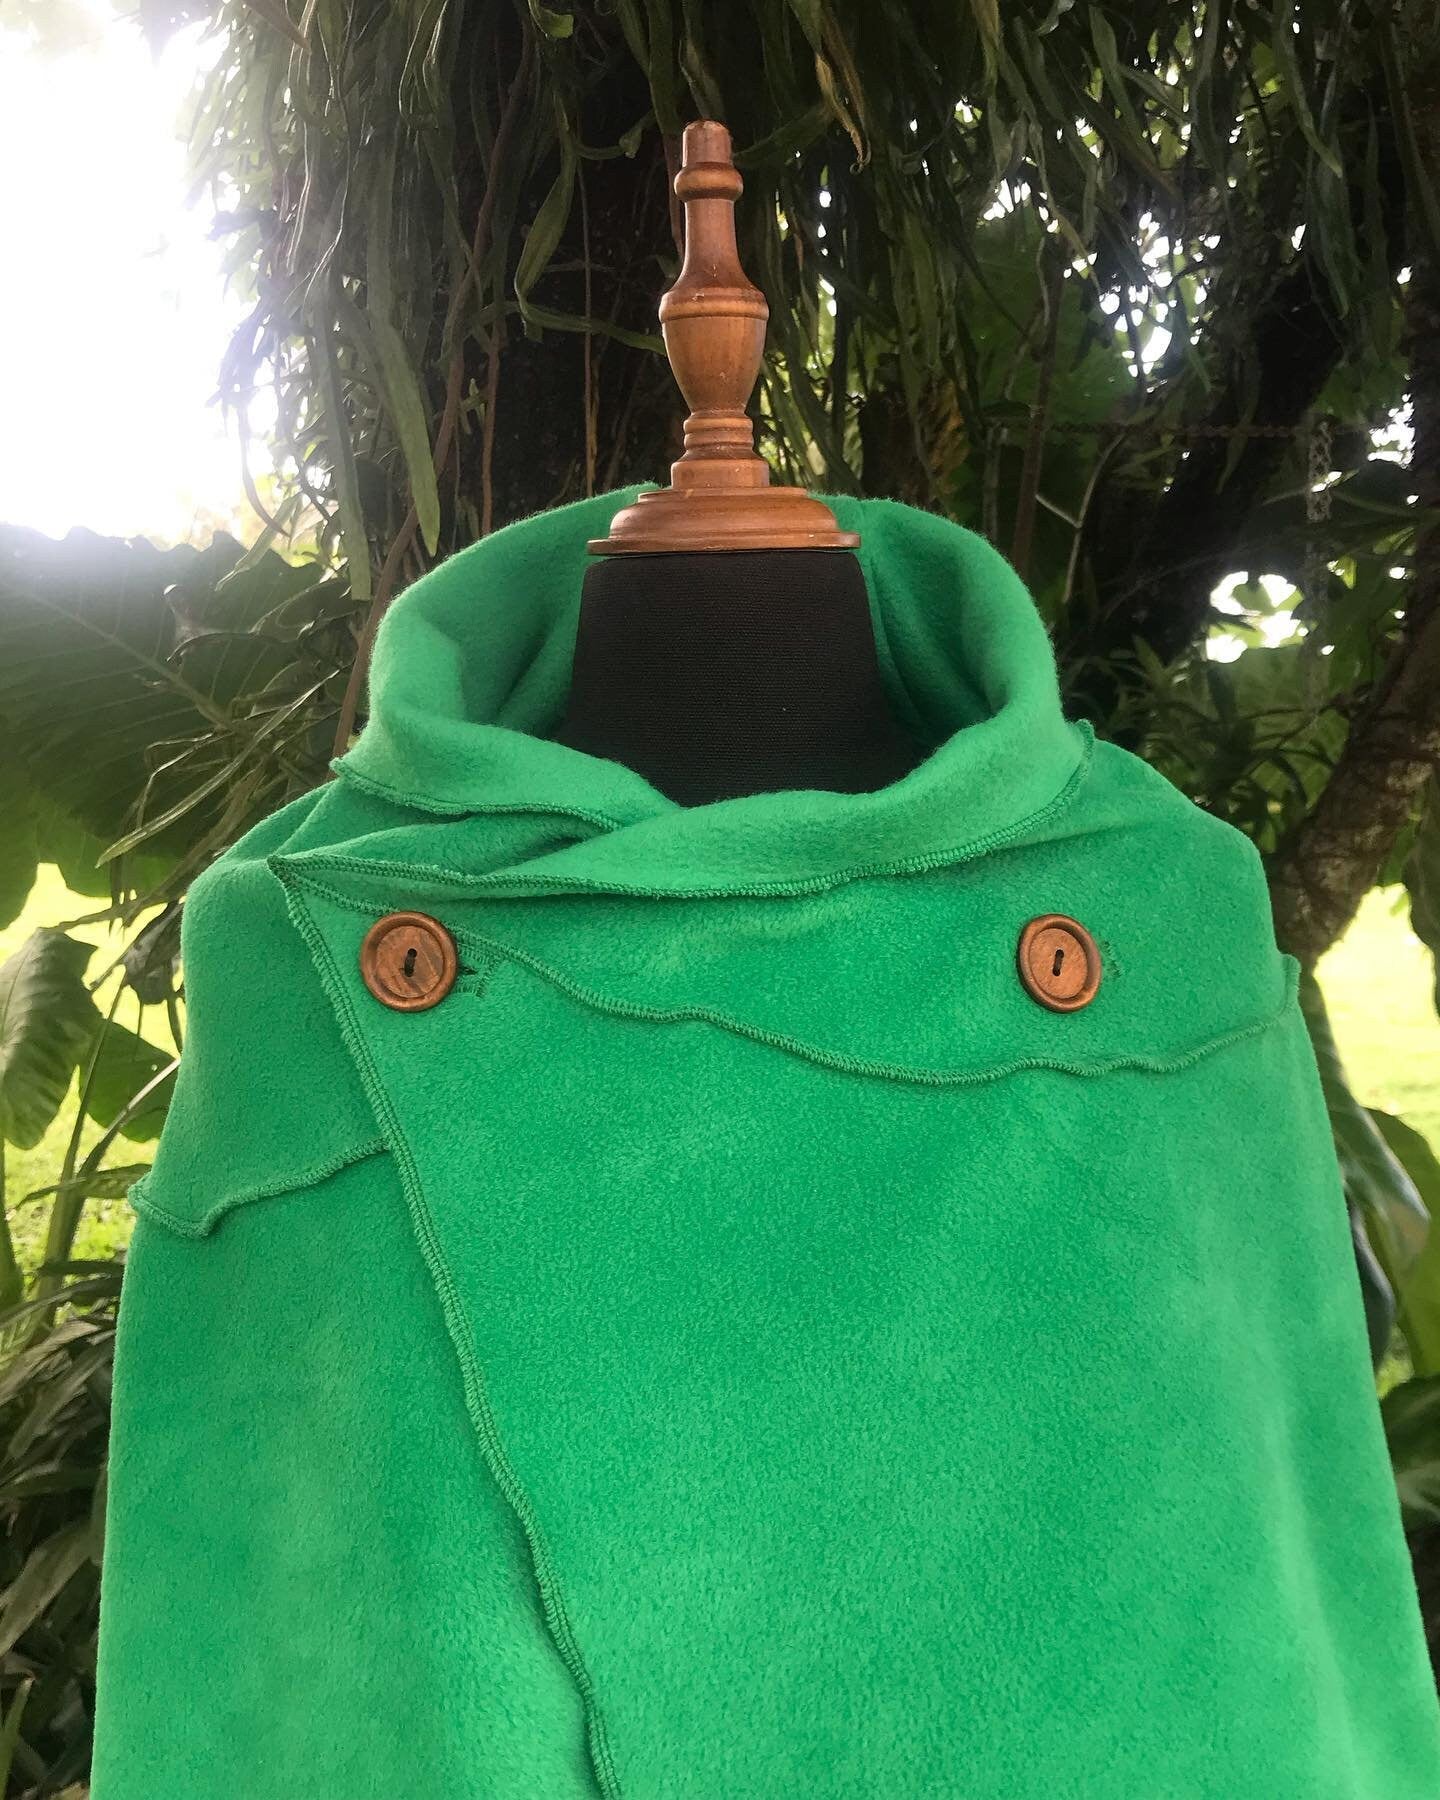 Bright Green - Leaf Cape Poncho with Giant Pixie Hood - - cloak - cape